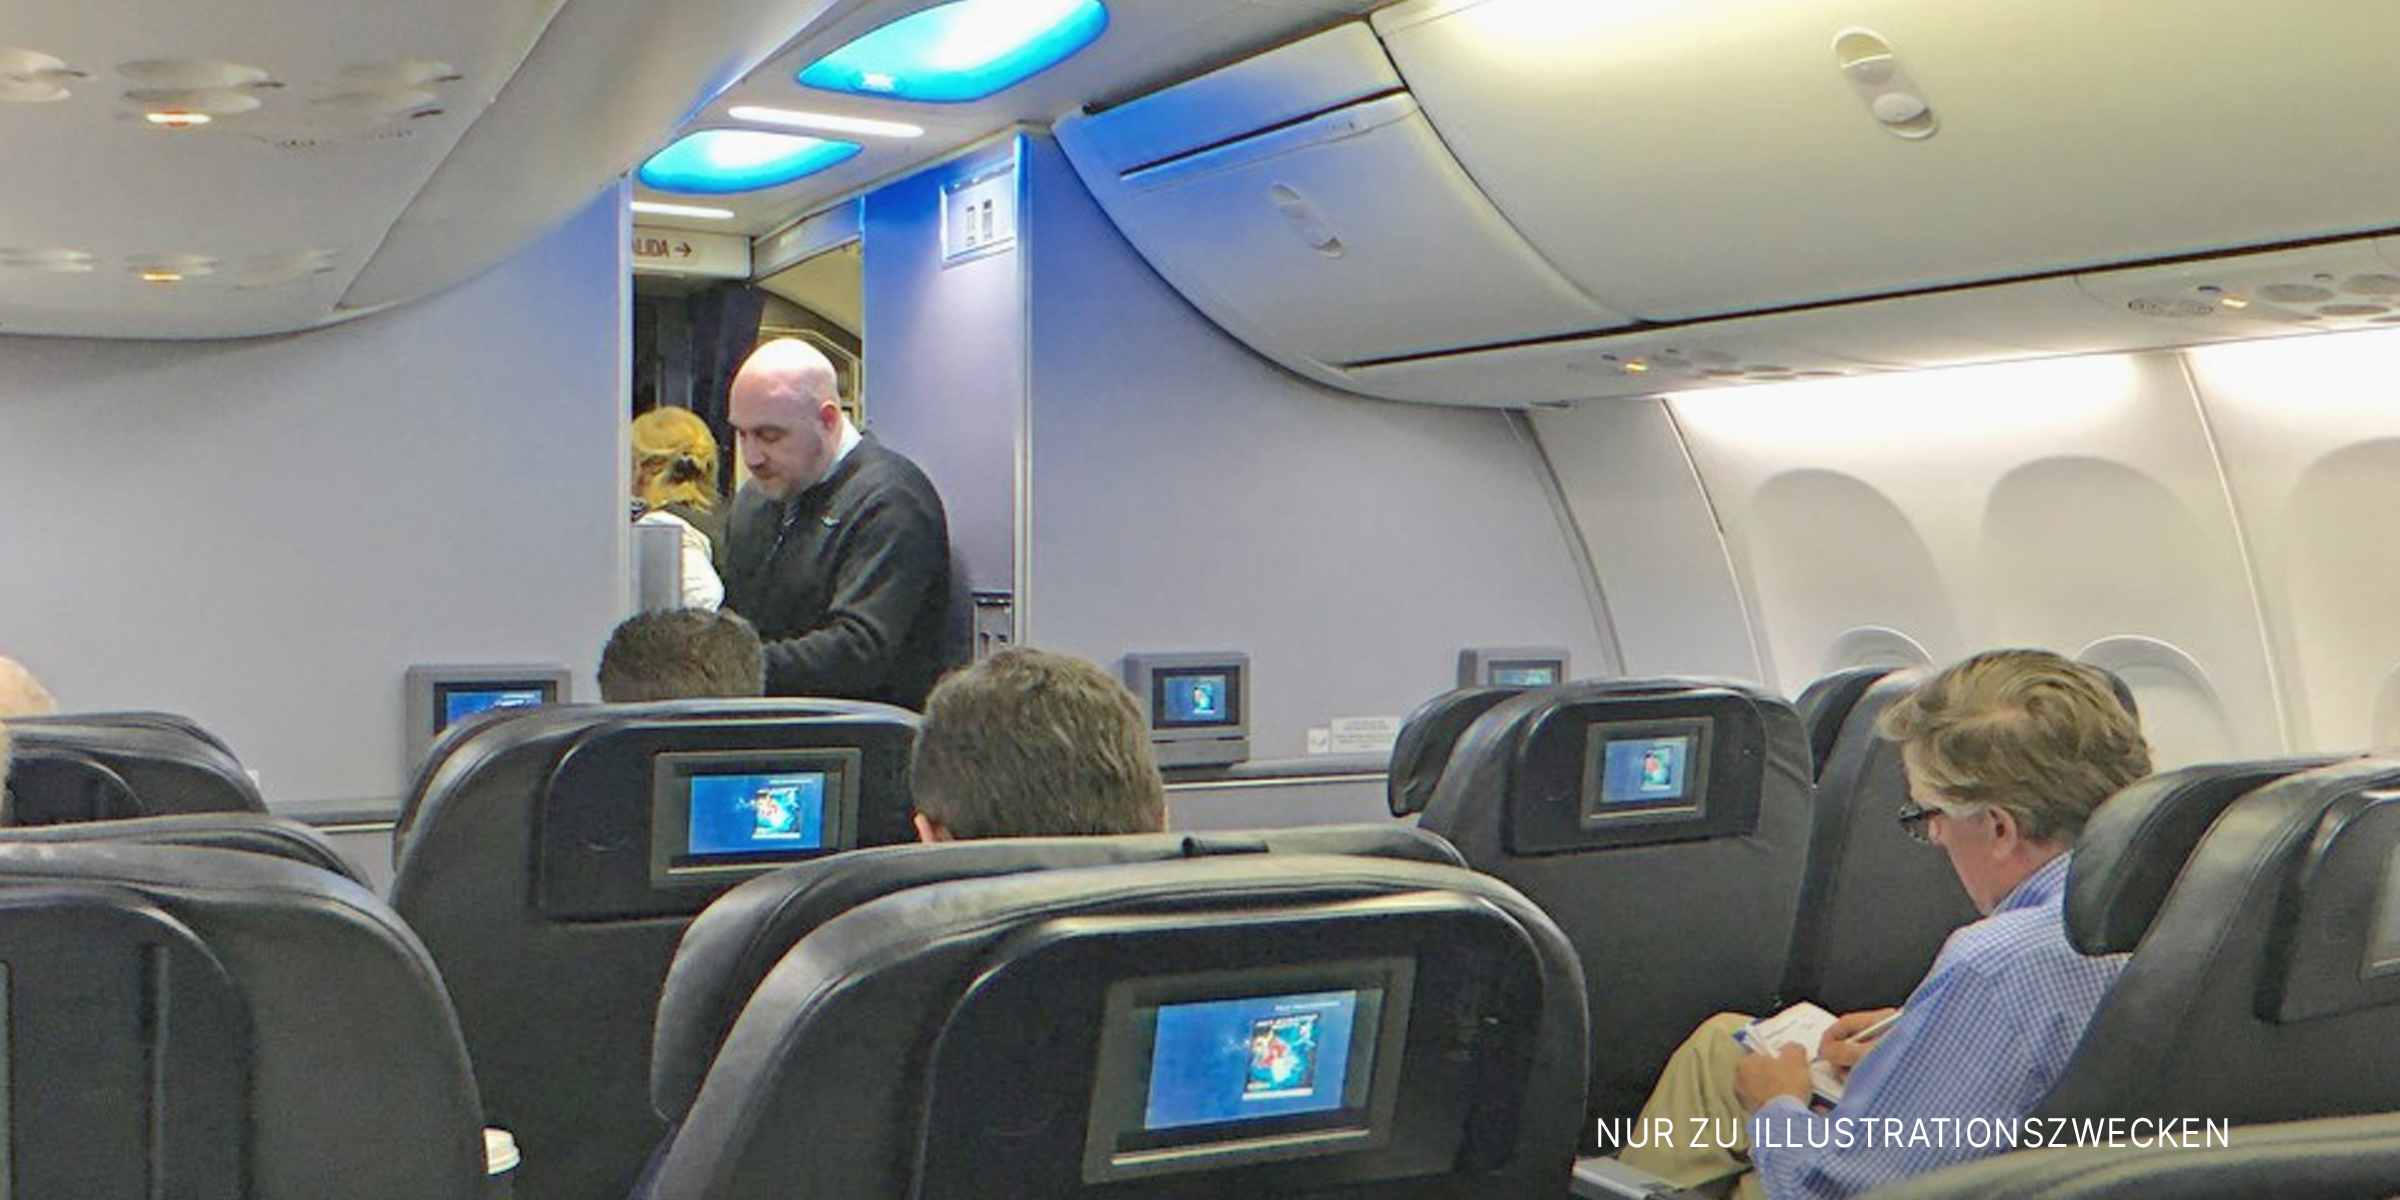 Flugbegleiter im Flugzeug | Quelle: Flickr.com/alan-light (CC BY 2.0)